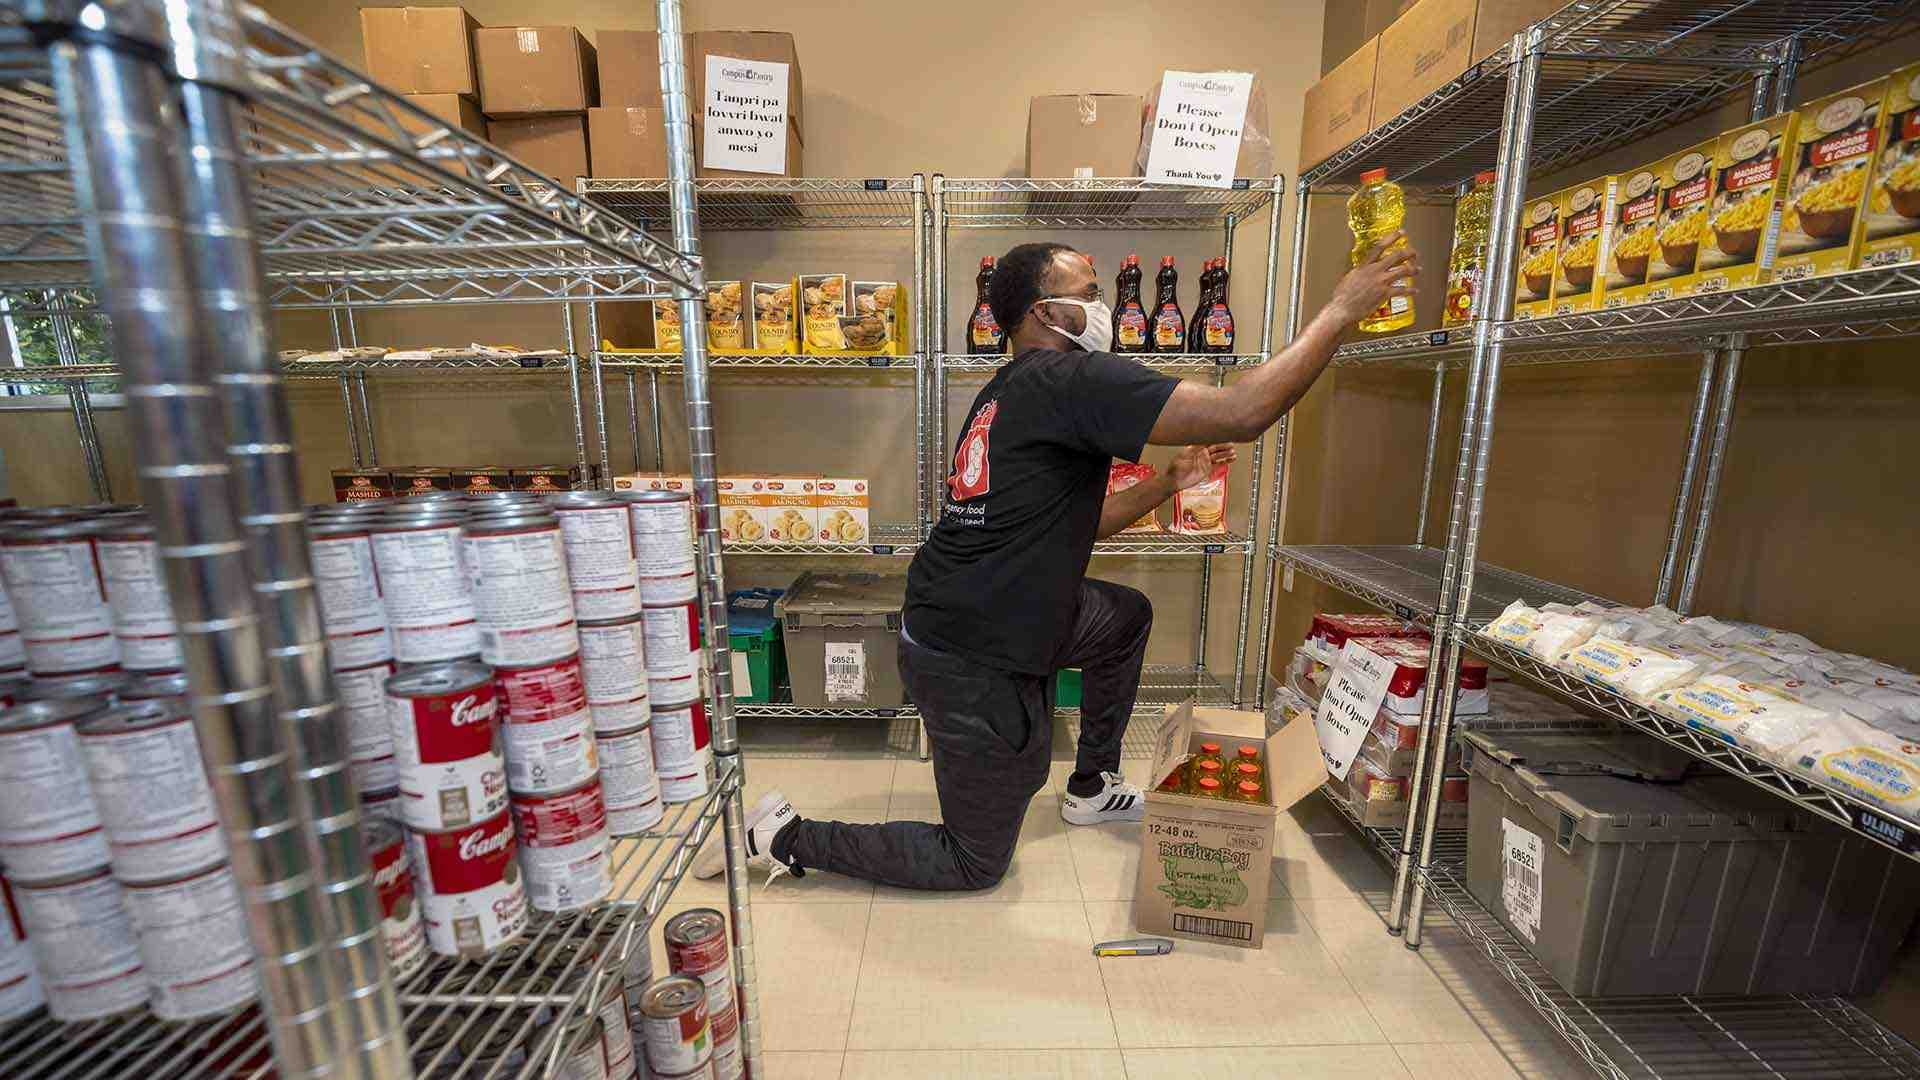 Staff member stocks shelves in Campus Pantry